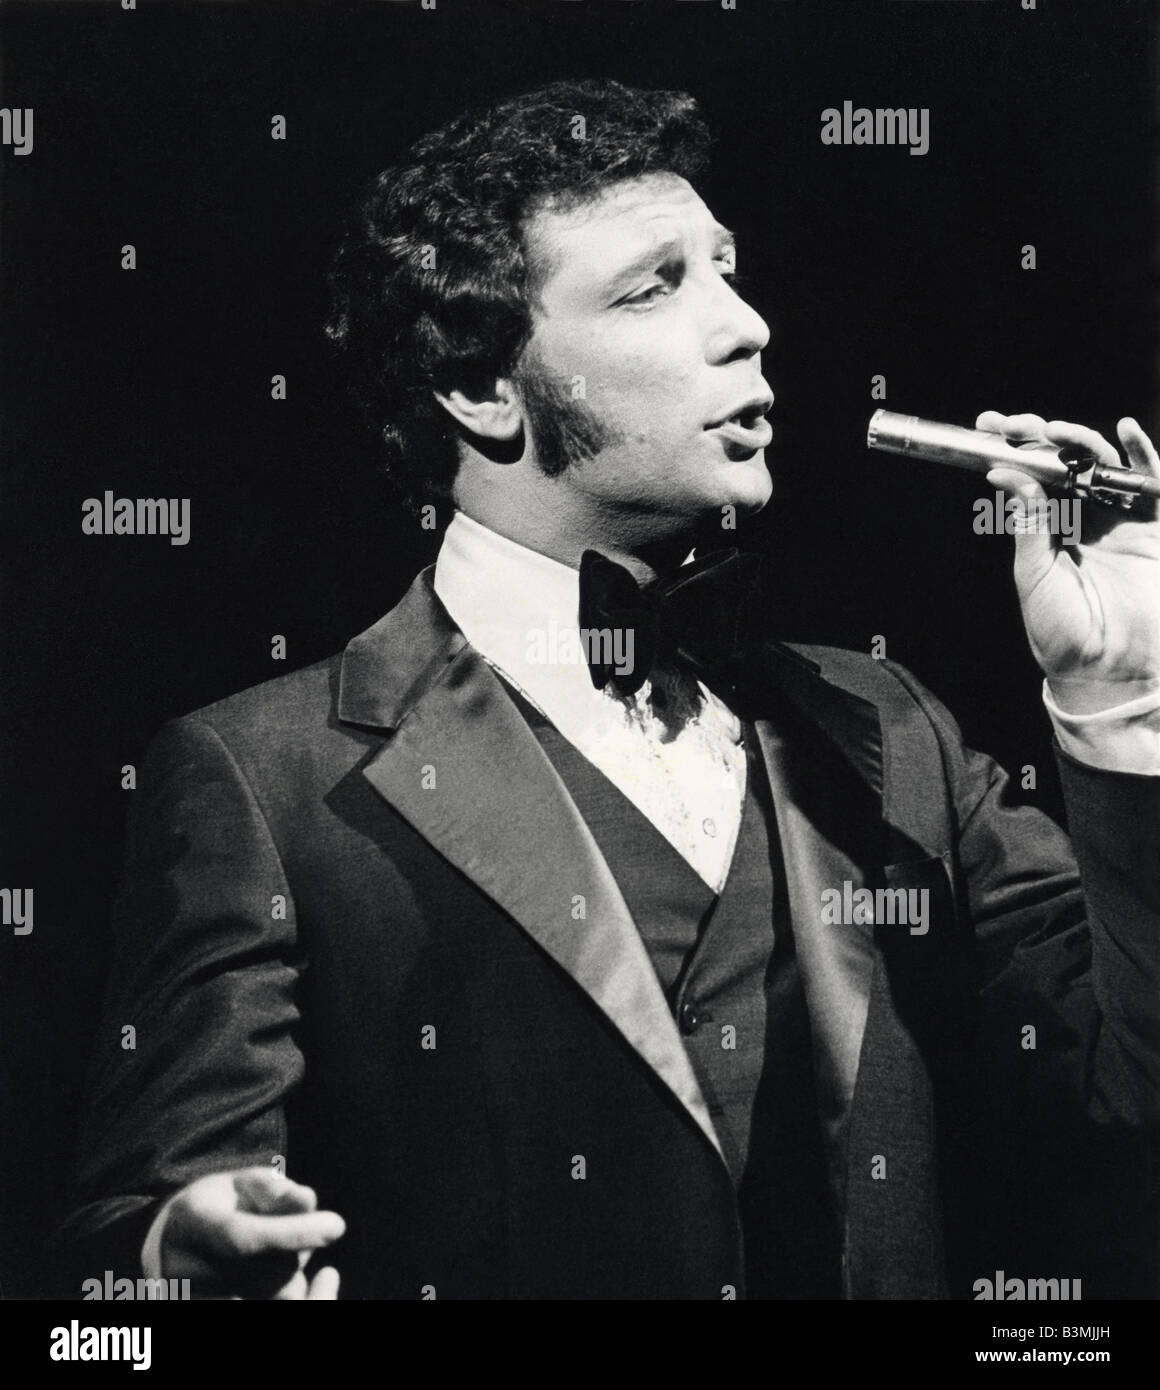 TOM JONES Welsh pop singer about 1968 Stock Photo - Alamy